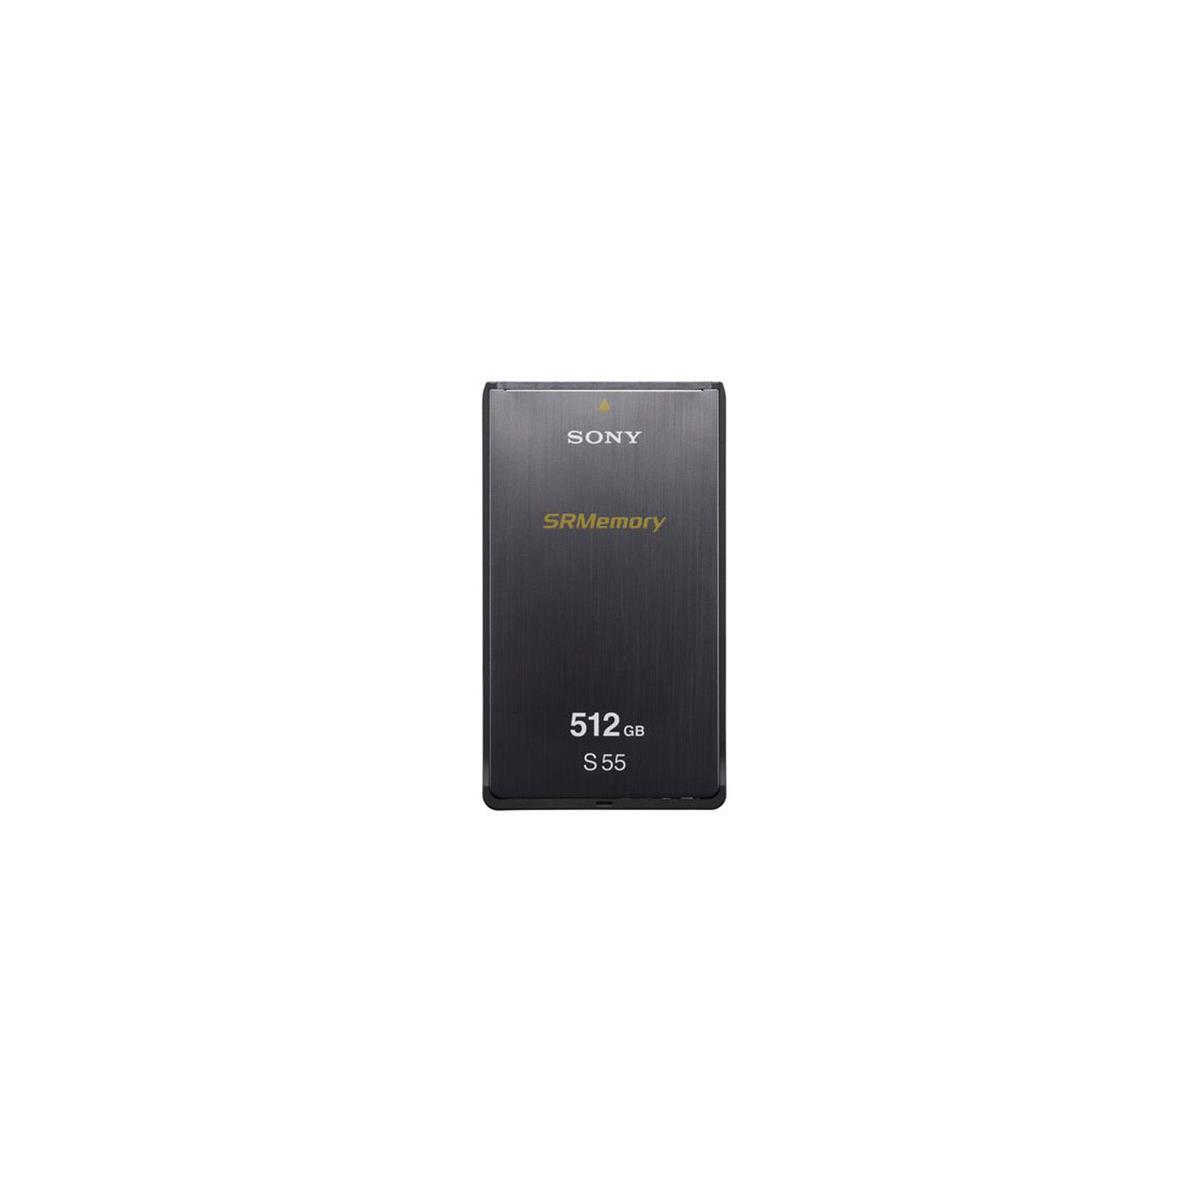 Image of Sony 512GB S55 SeriesSRMemory Card Memory Card